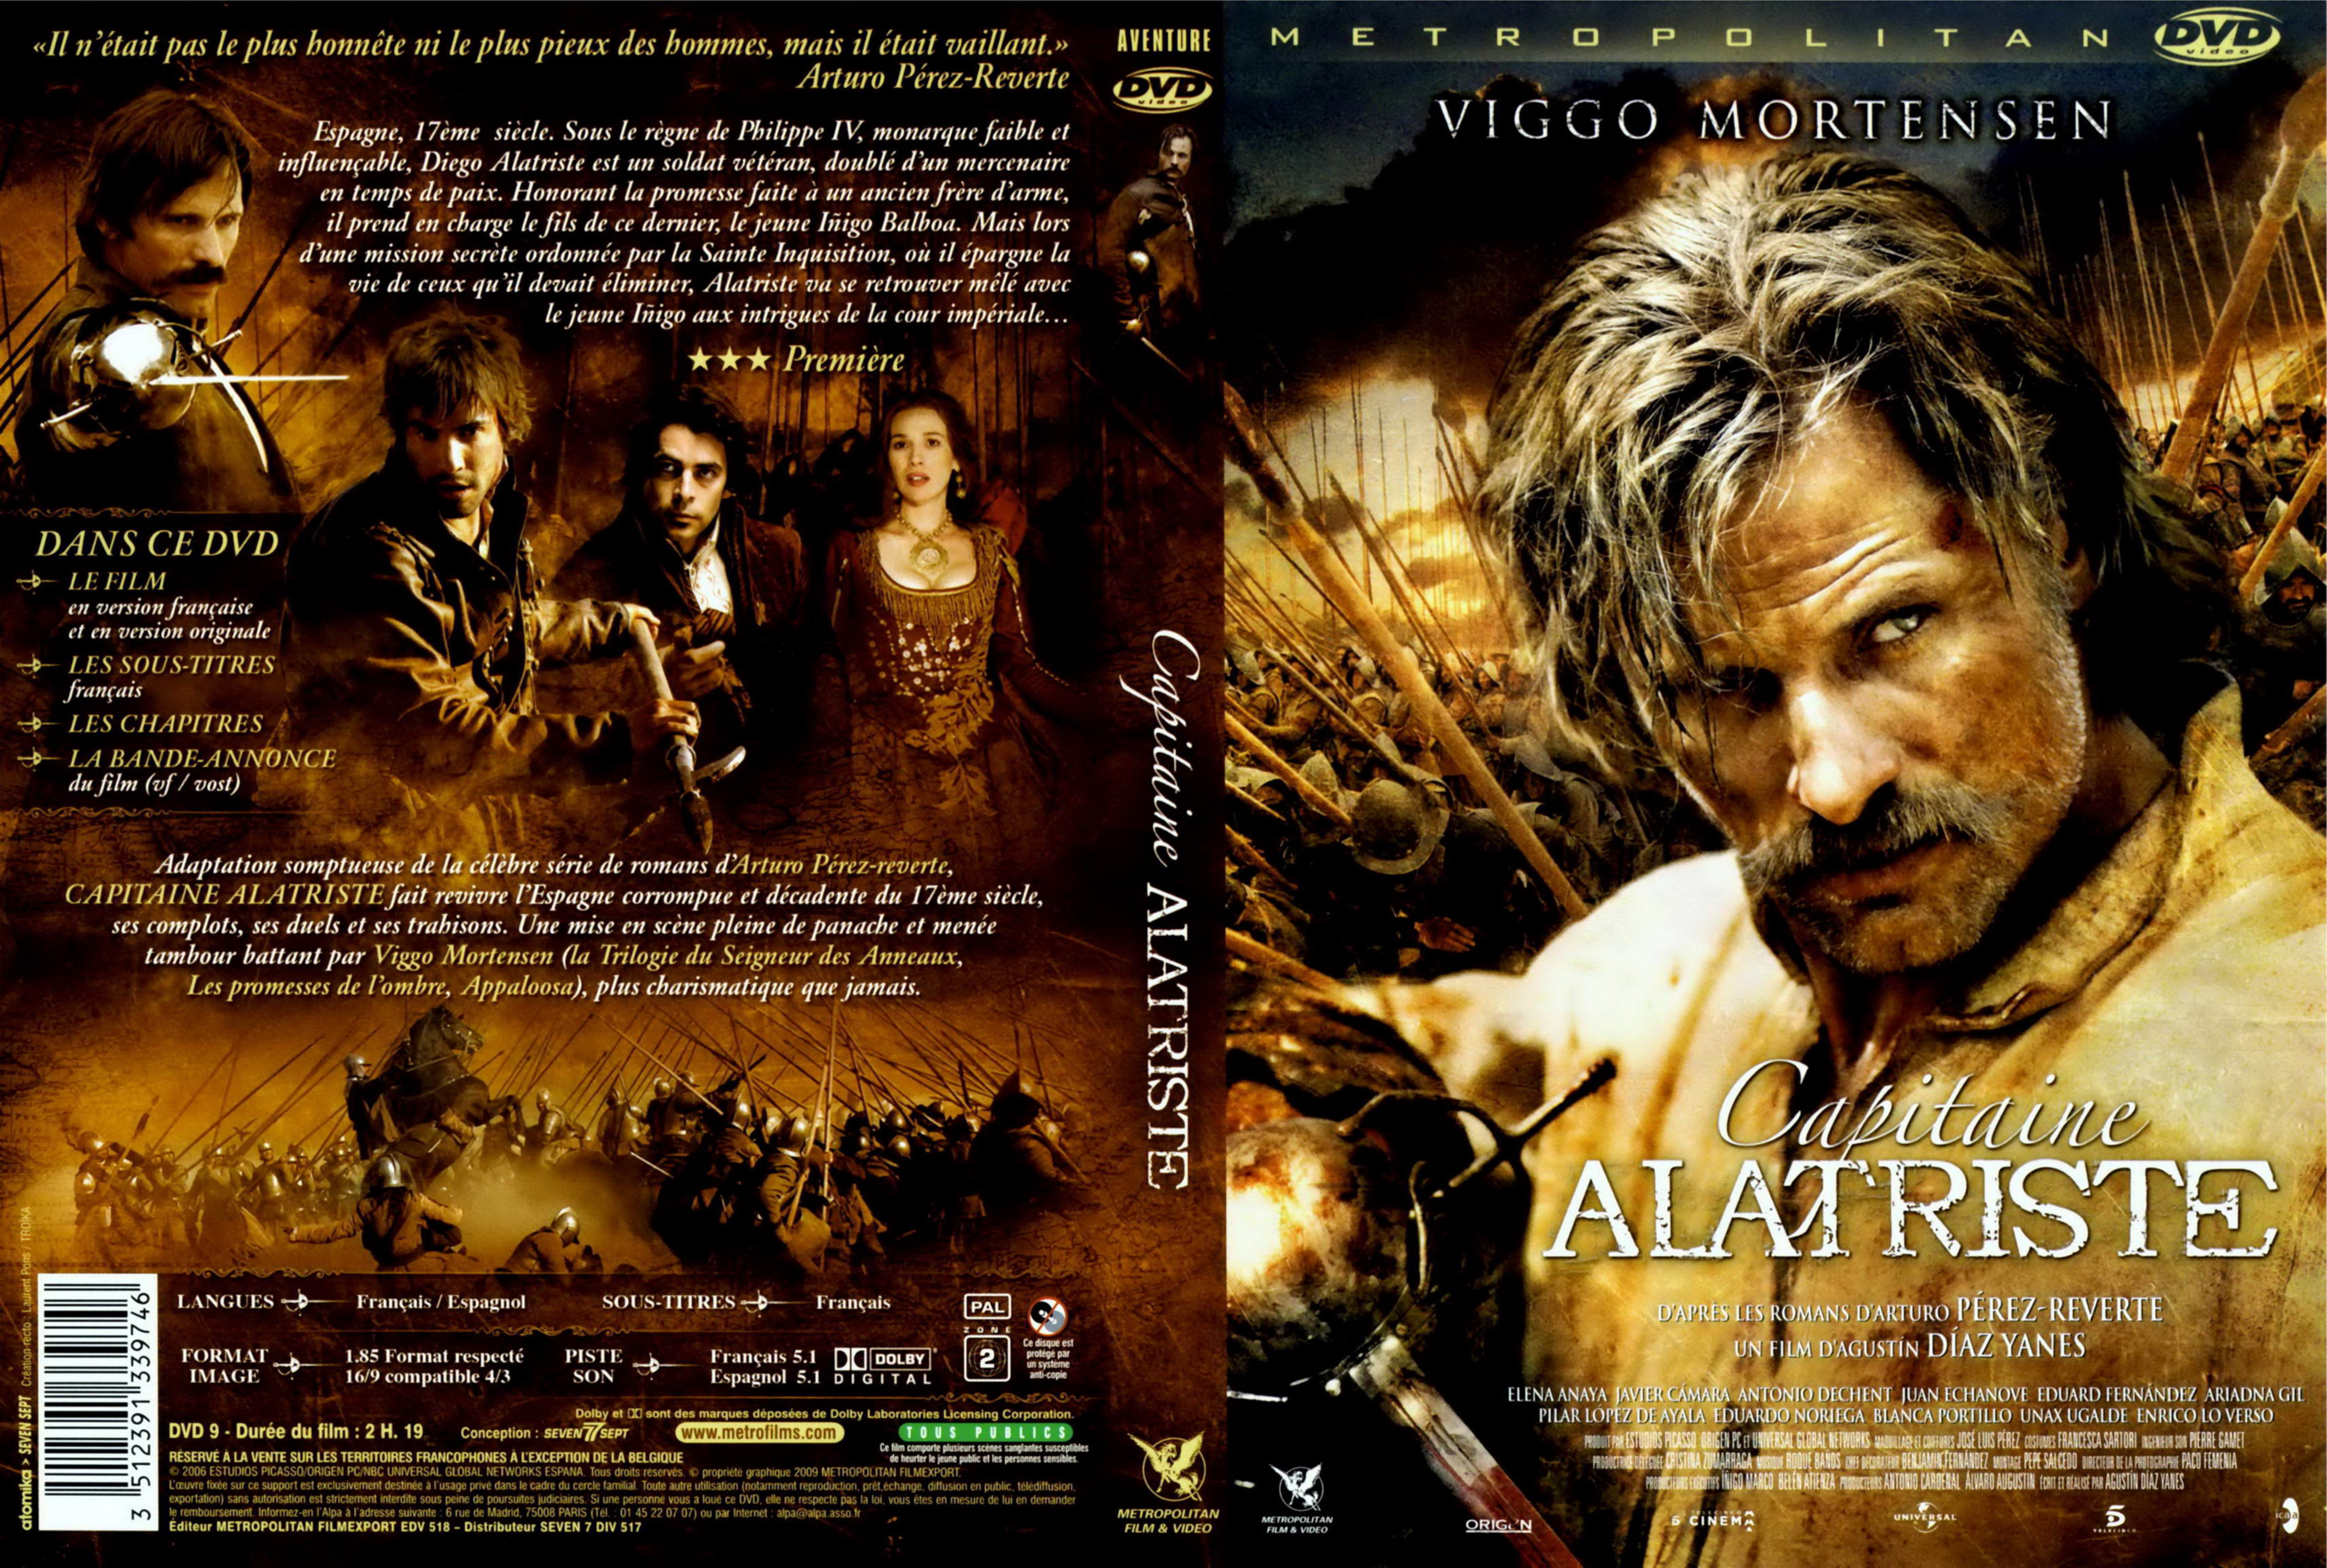 Jaquette DVD Capitaine Alatriste